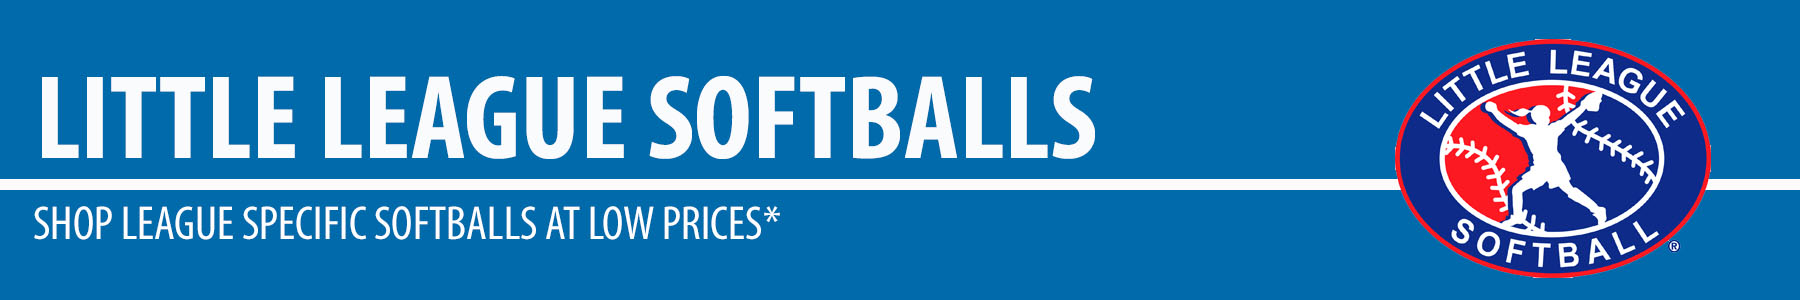 Little League Softballs - Leather Little League Softballs